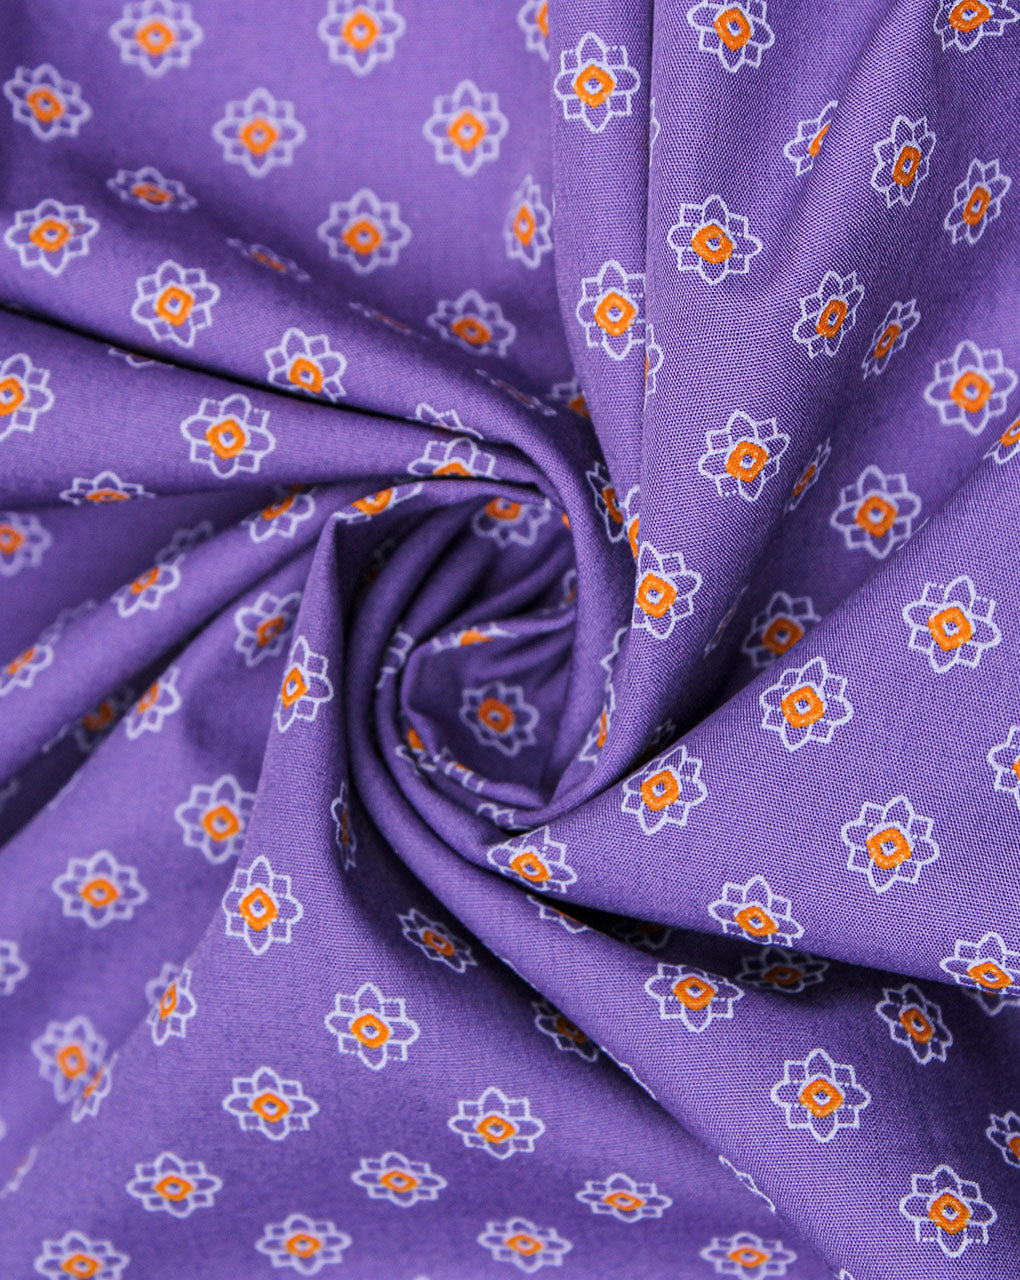 Purple  And White Floral Design Cotton Print Fabric